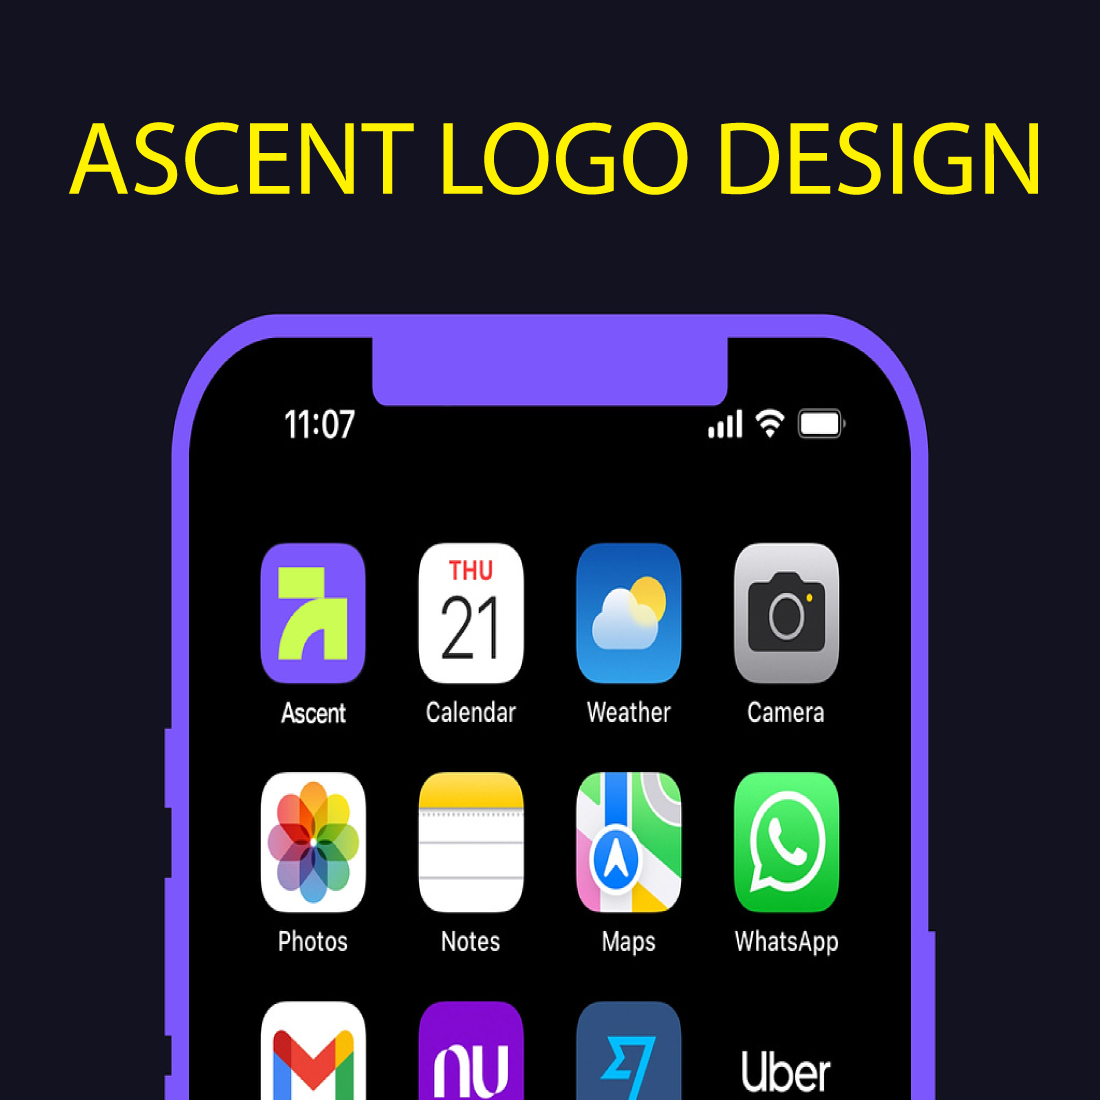 ascent logo design for finance or online preview image.